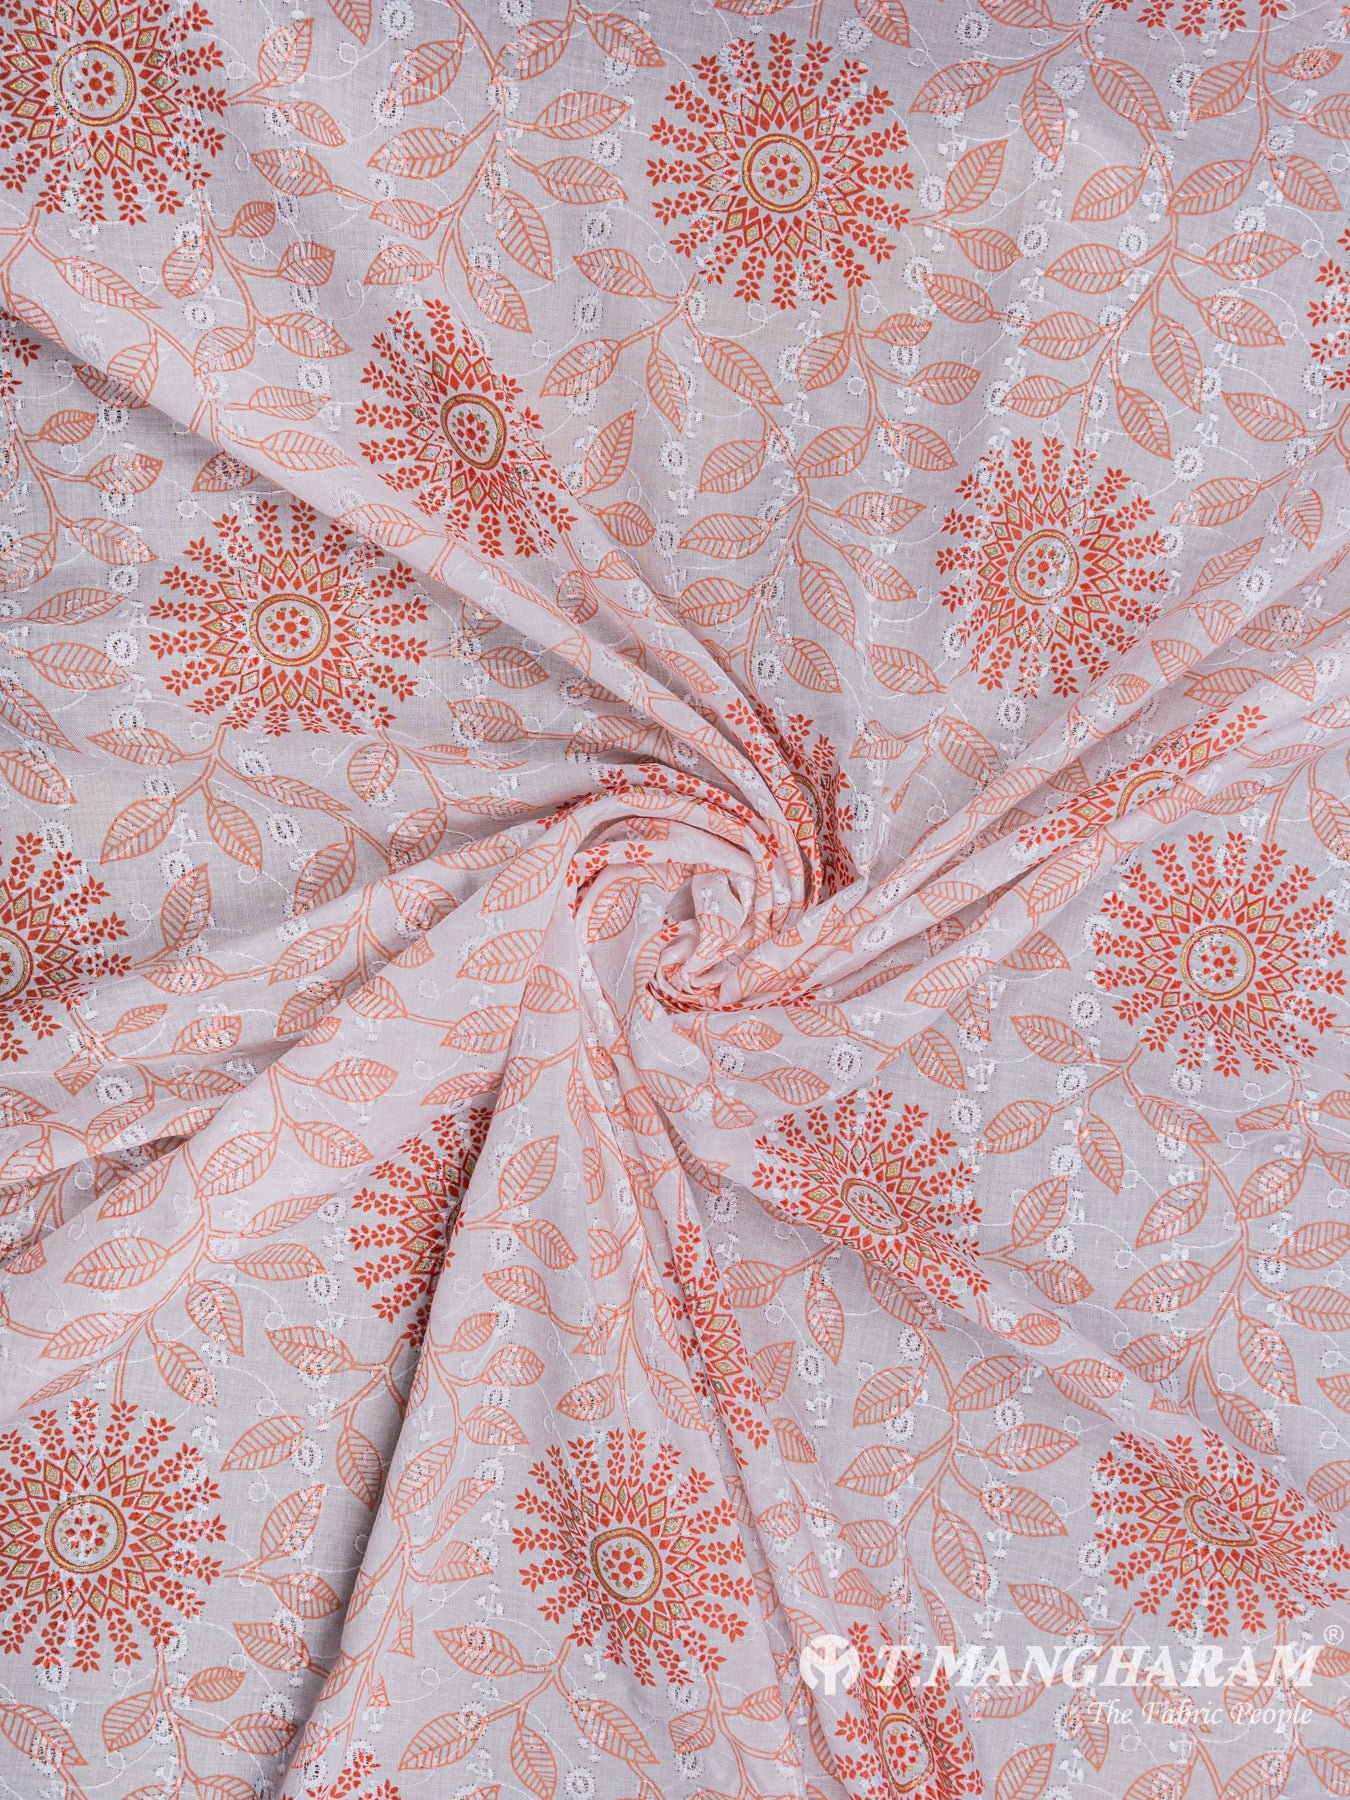 Peach Cotton Embroidery Fabric - EA1713 view-1